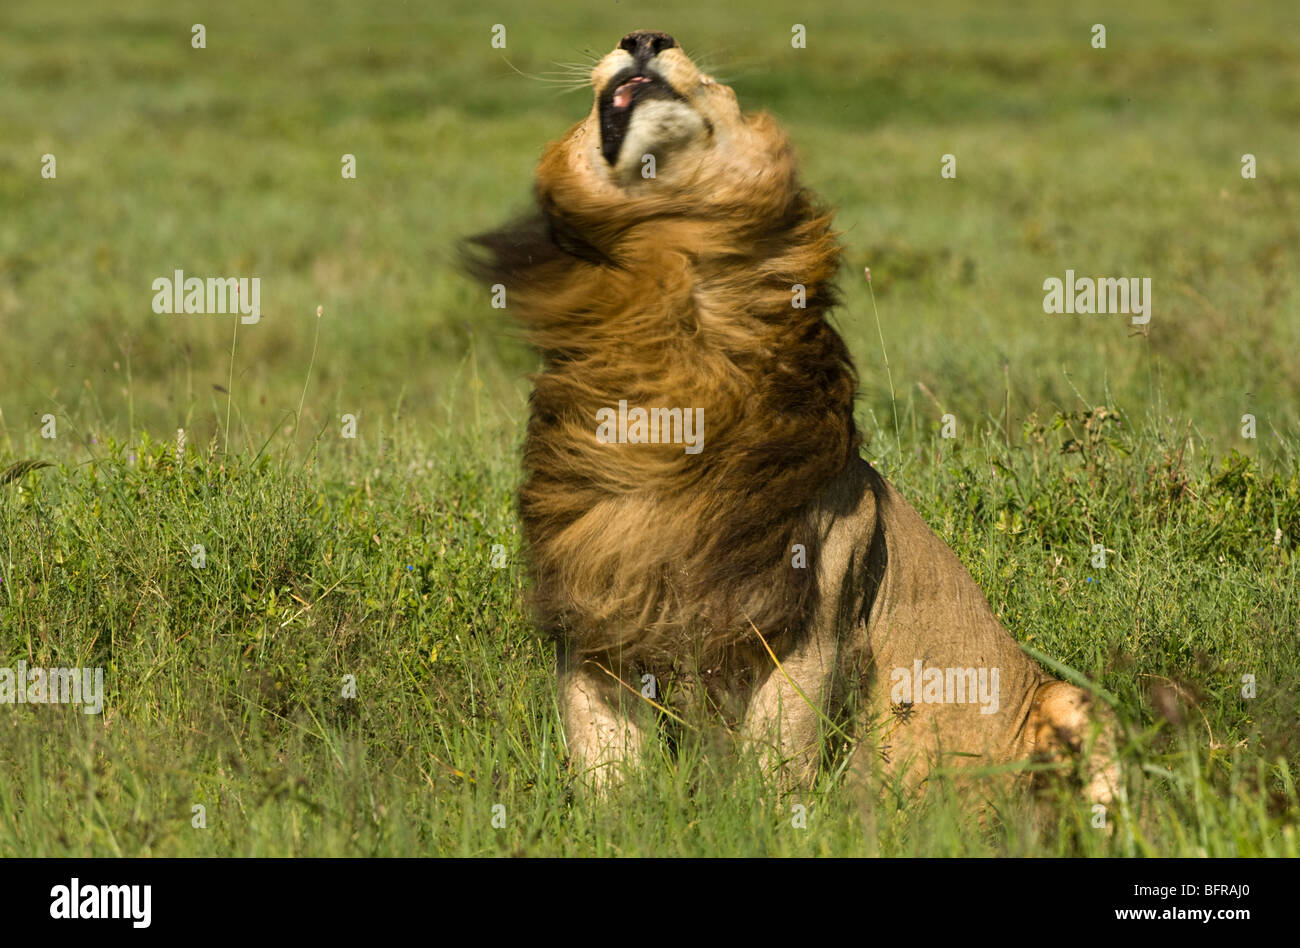 Male Lion shaking mane (Panthera leo) Stock Photo